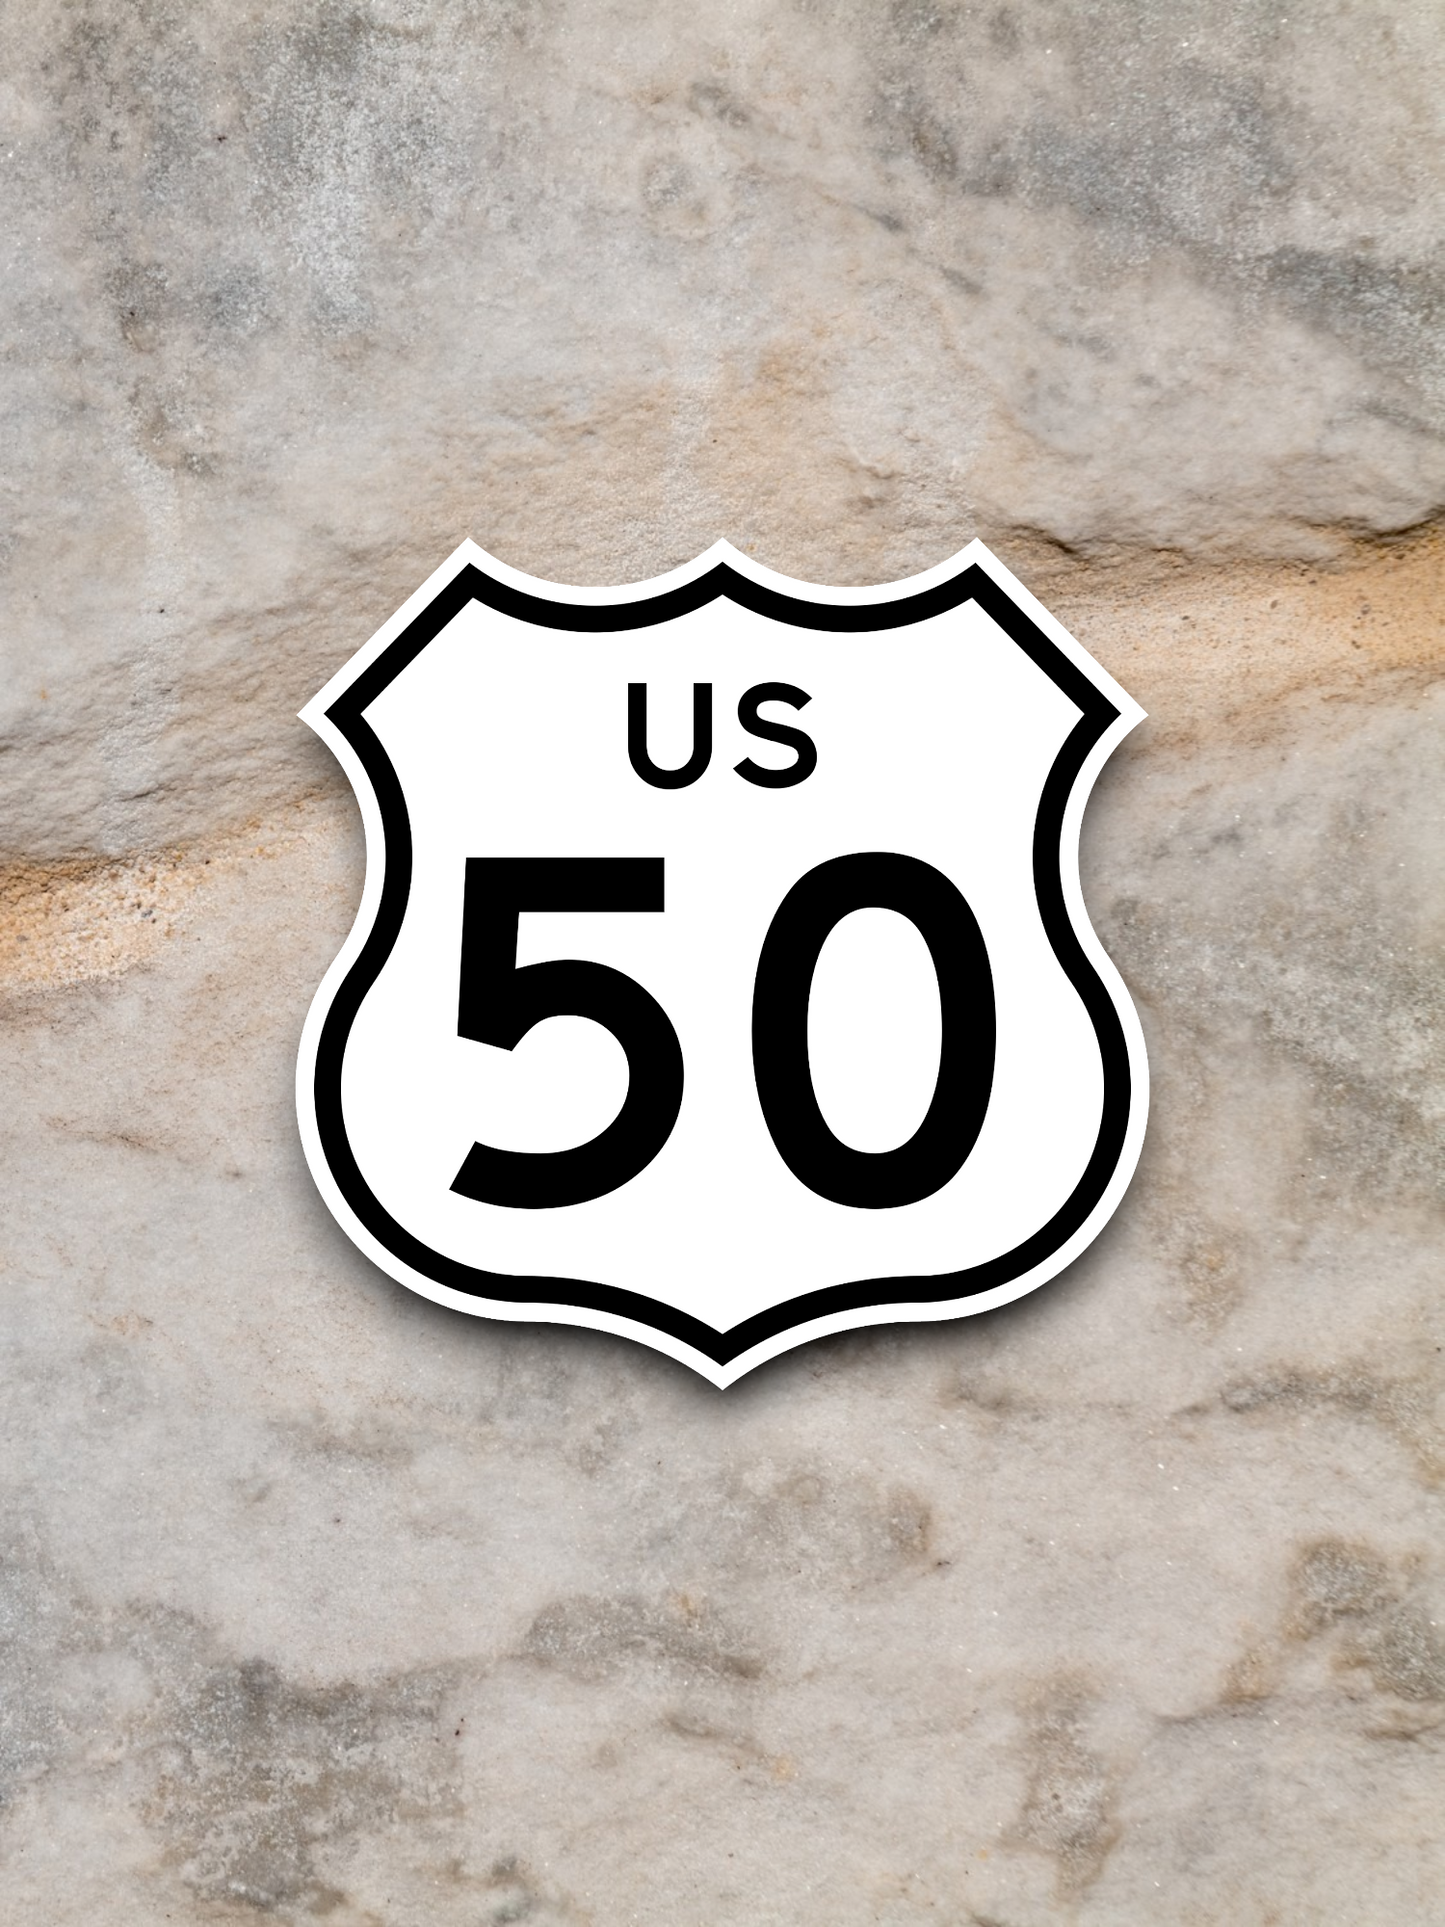 U.S. Route 50 Road Sign Sticker